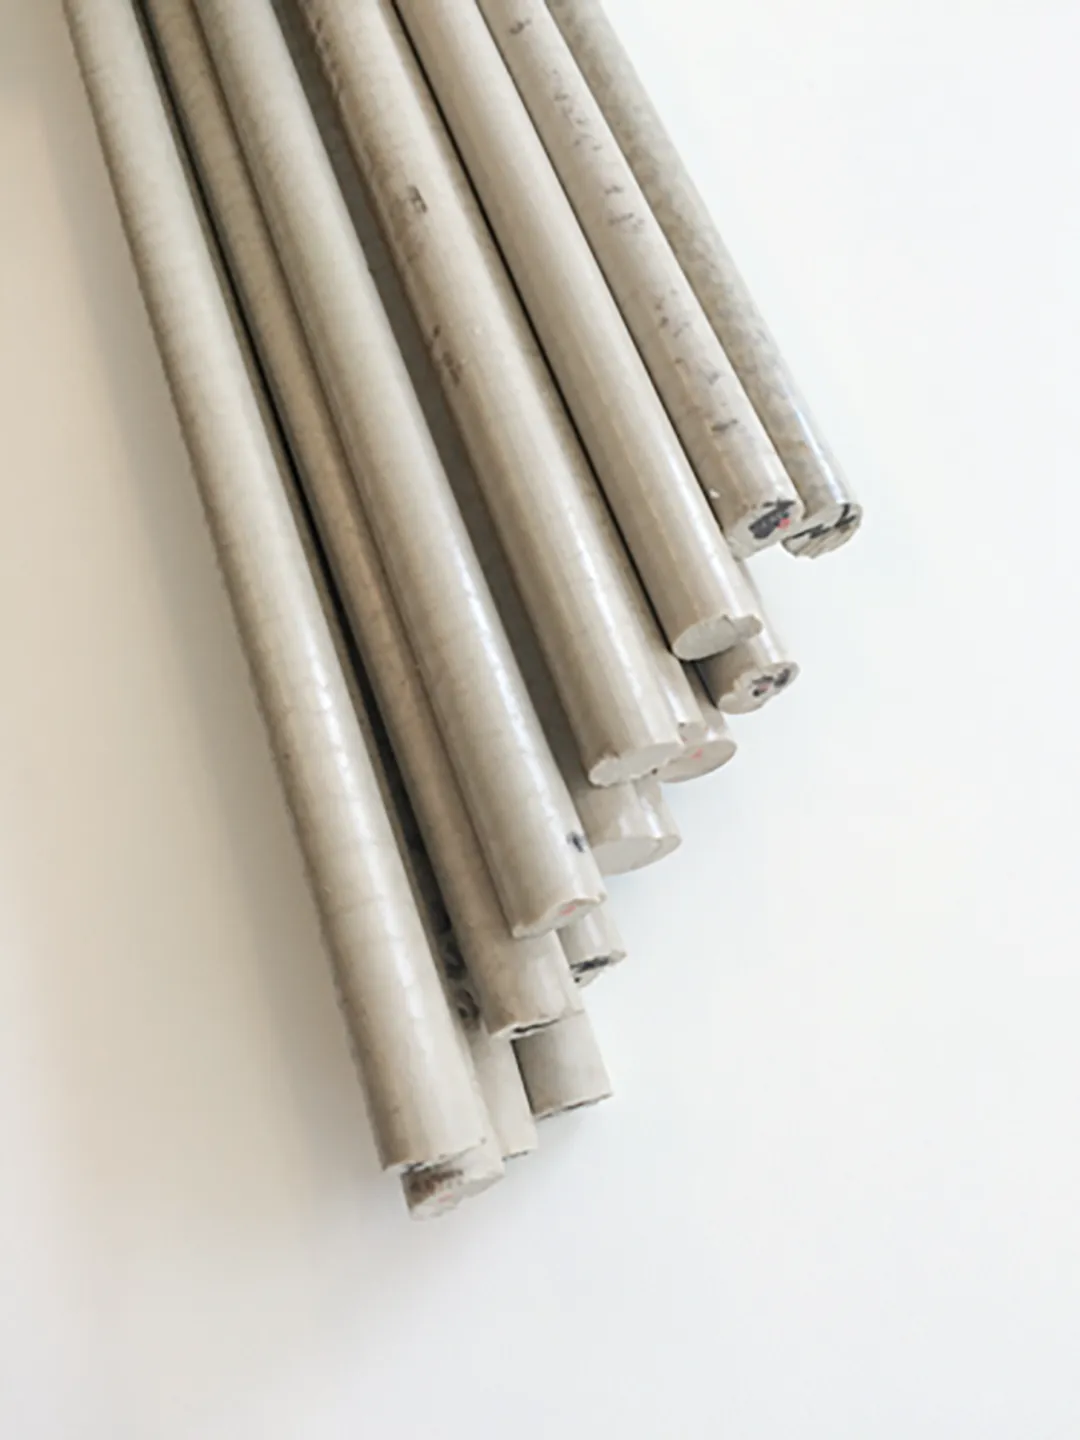 A bunch of PEEK rods from BIEGLO GmbH